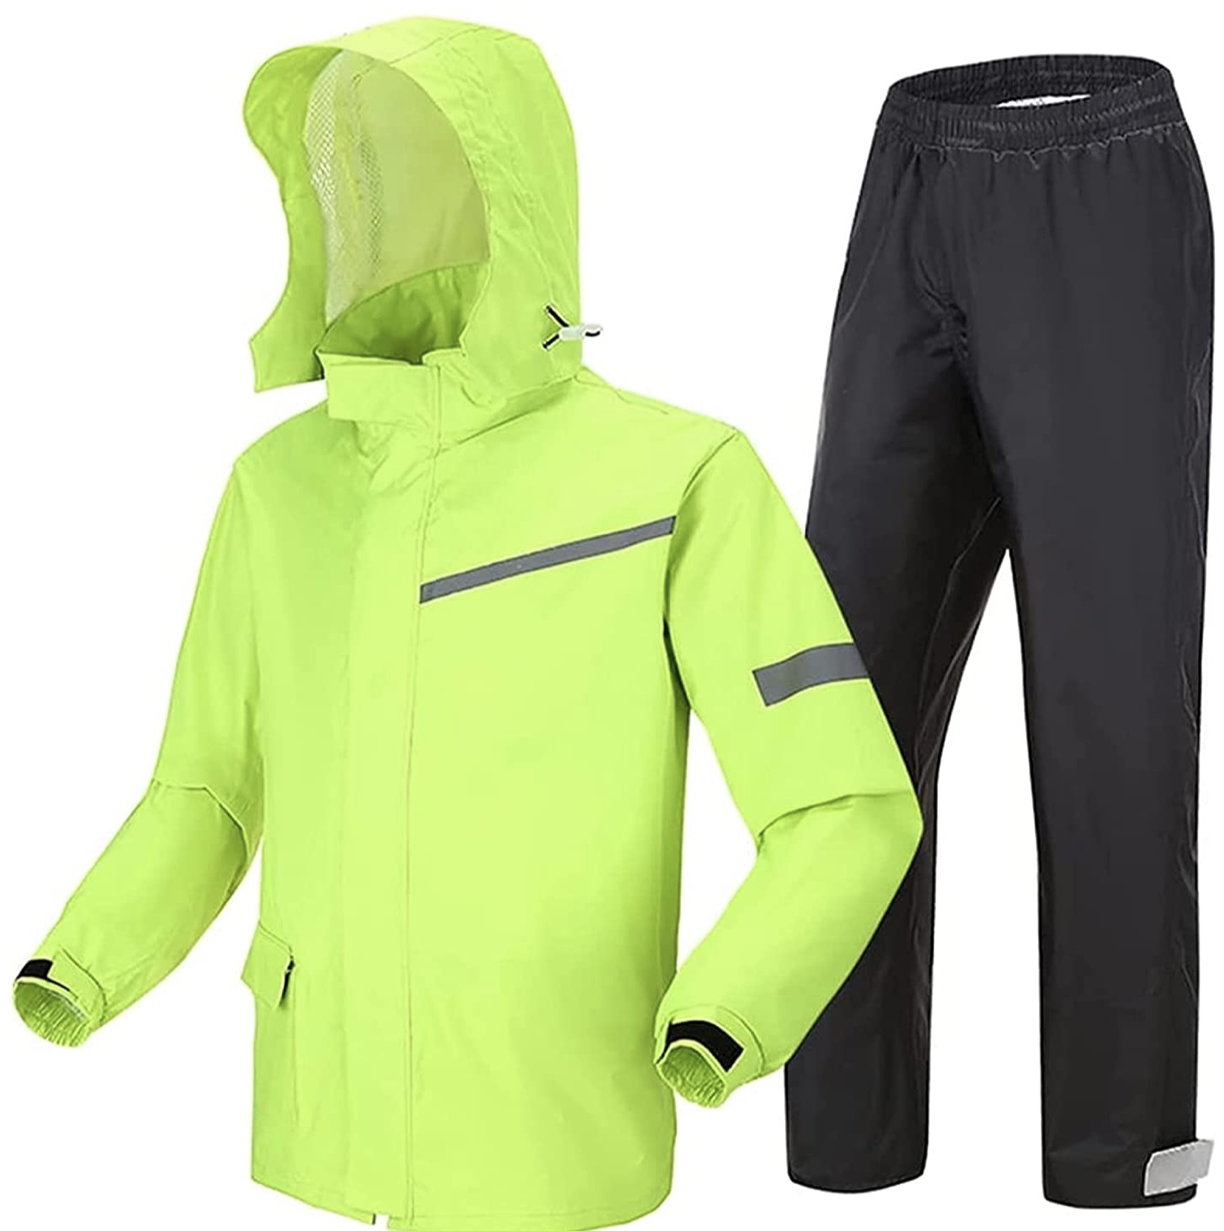 Manteau imperméable Long Raincoat Rainwear (Jacket & Trouser) Waterproof Breathable Rain Suits